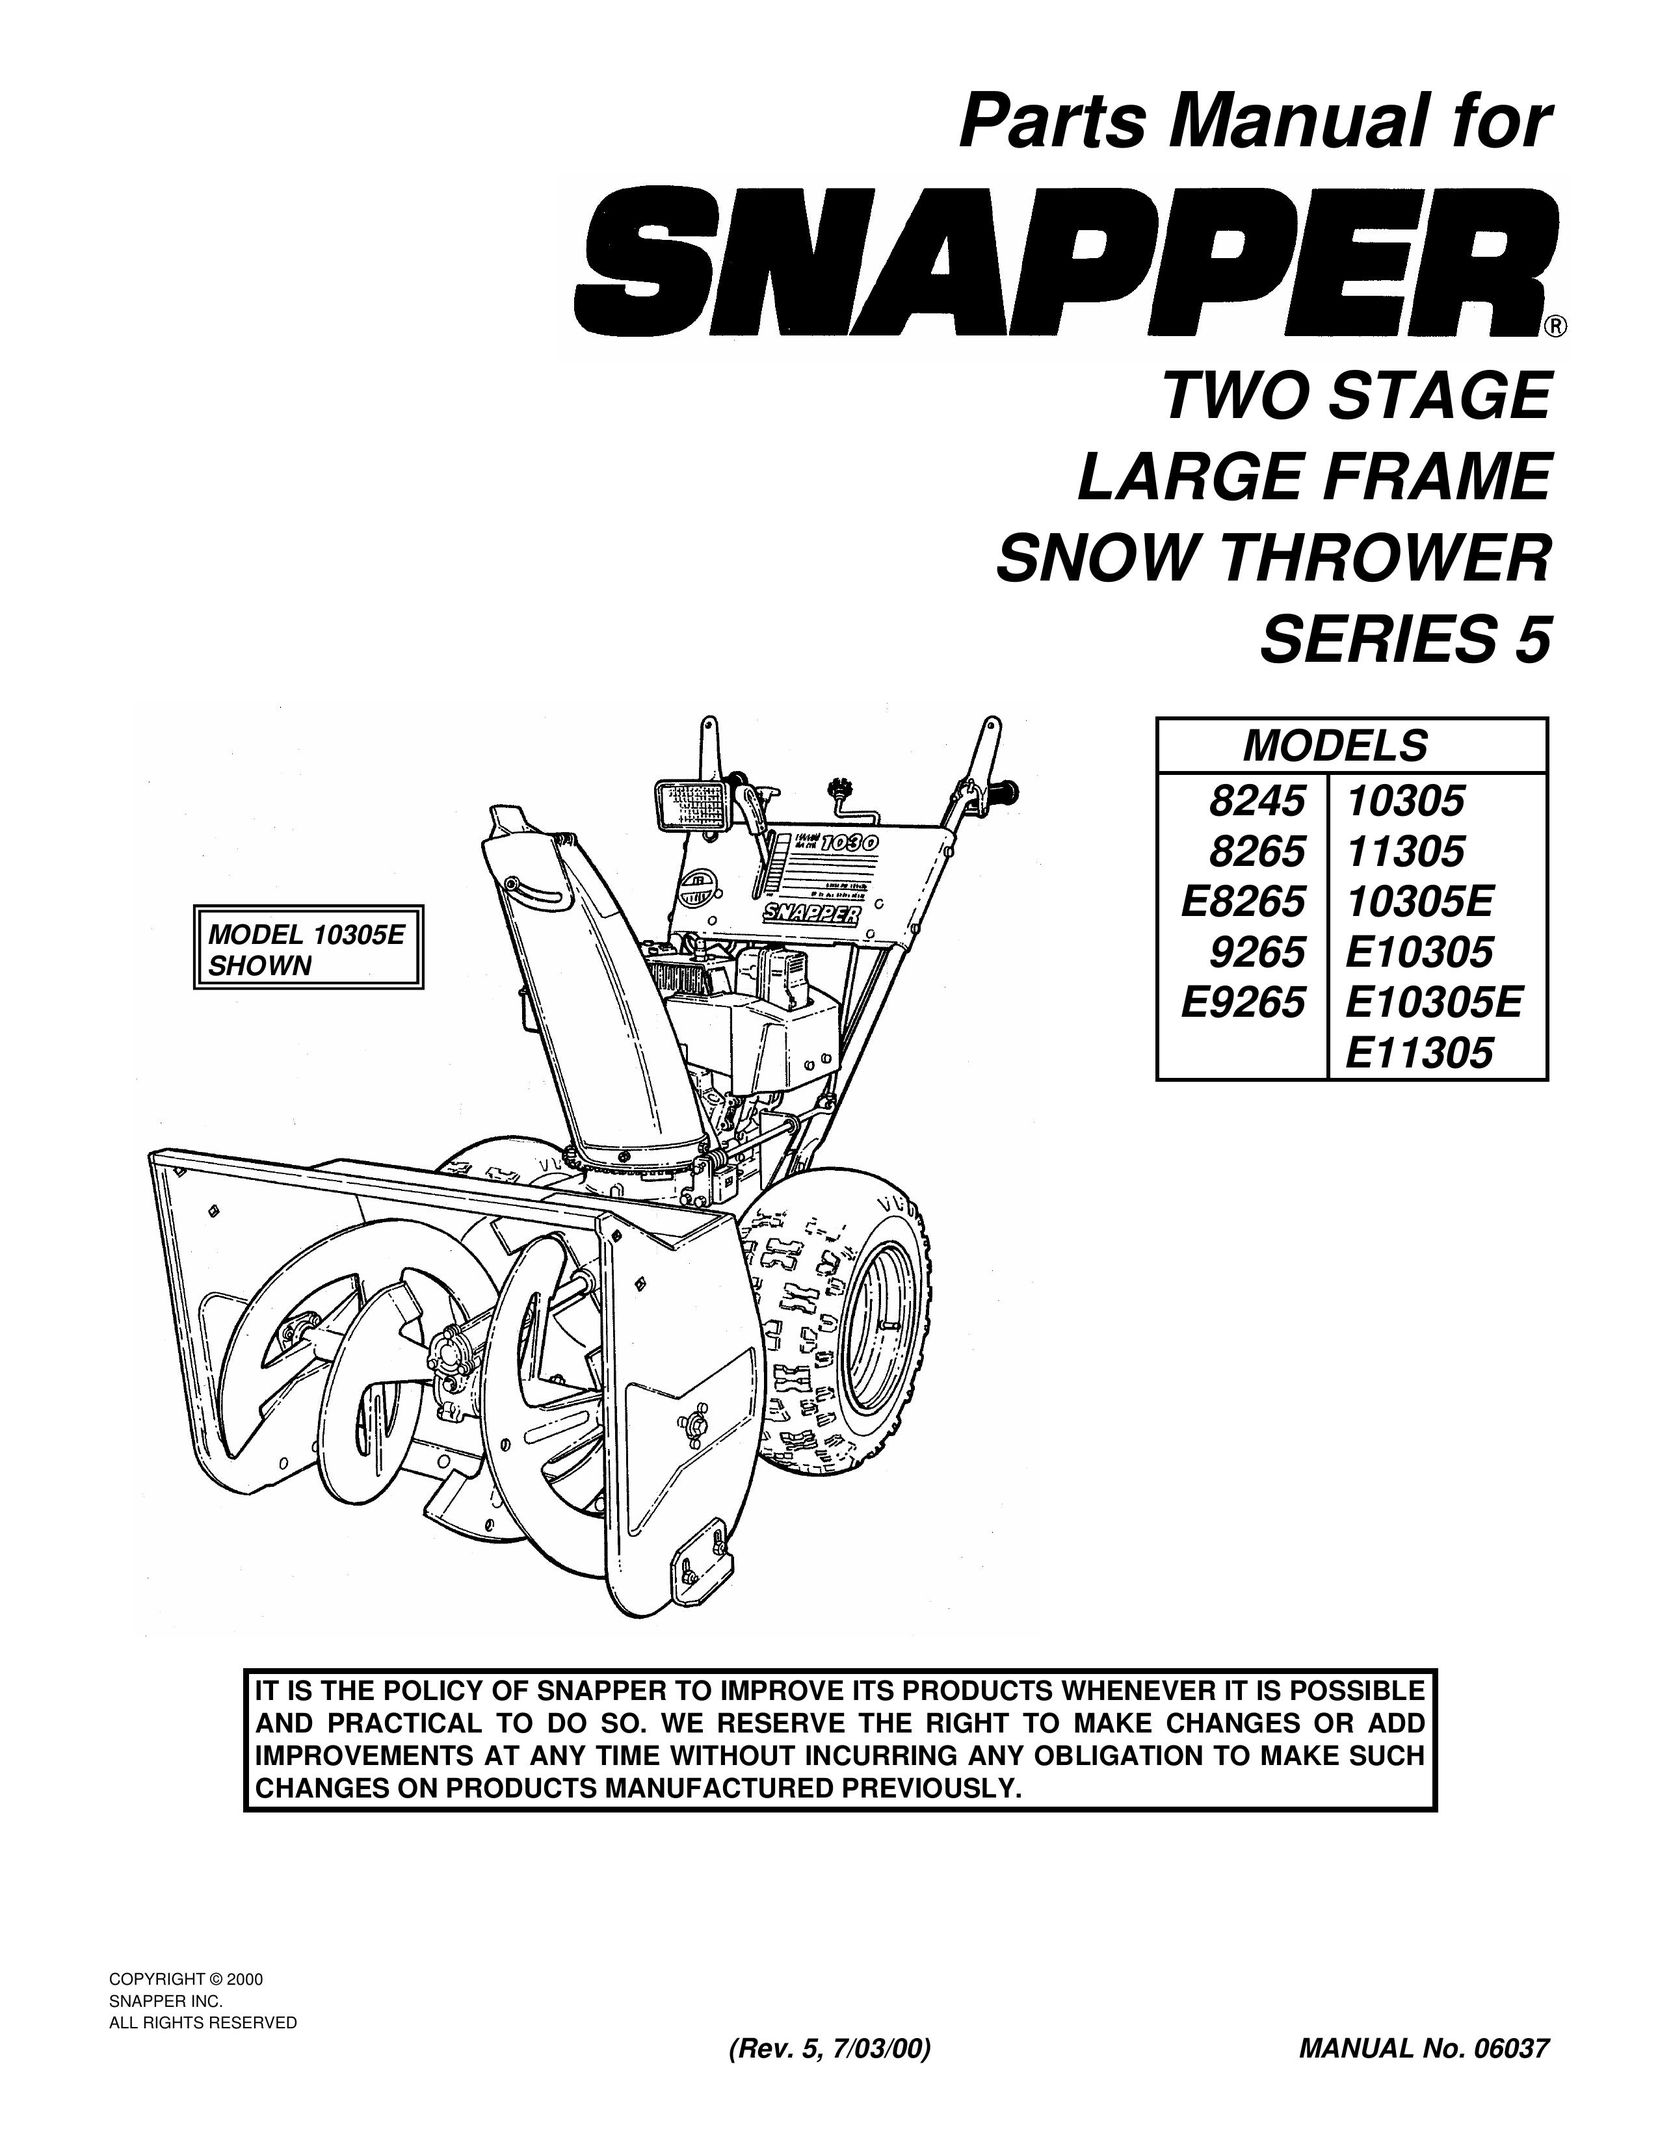 Snapper E8265 VCR User Manual